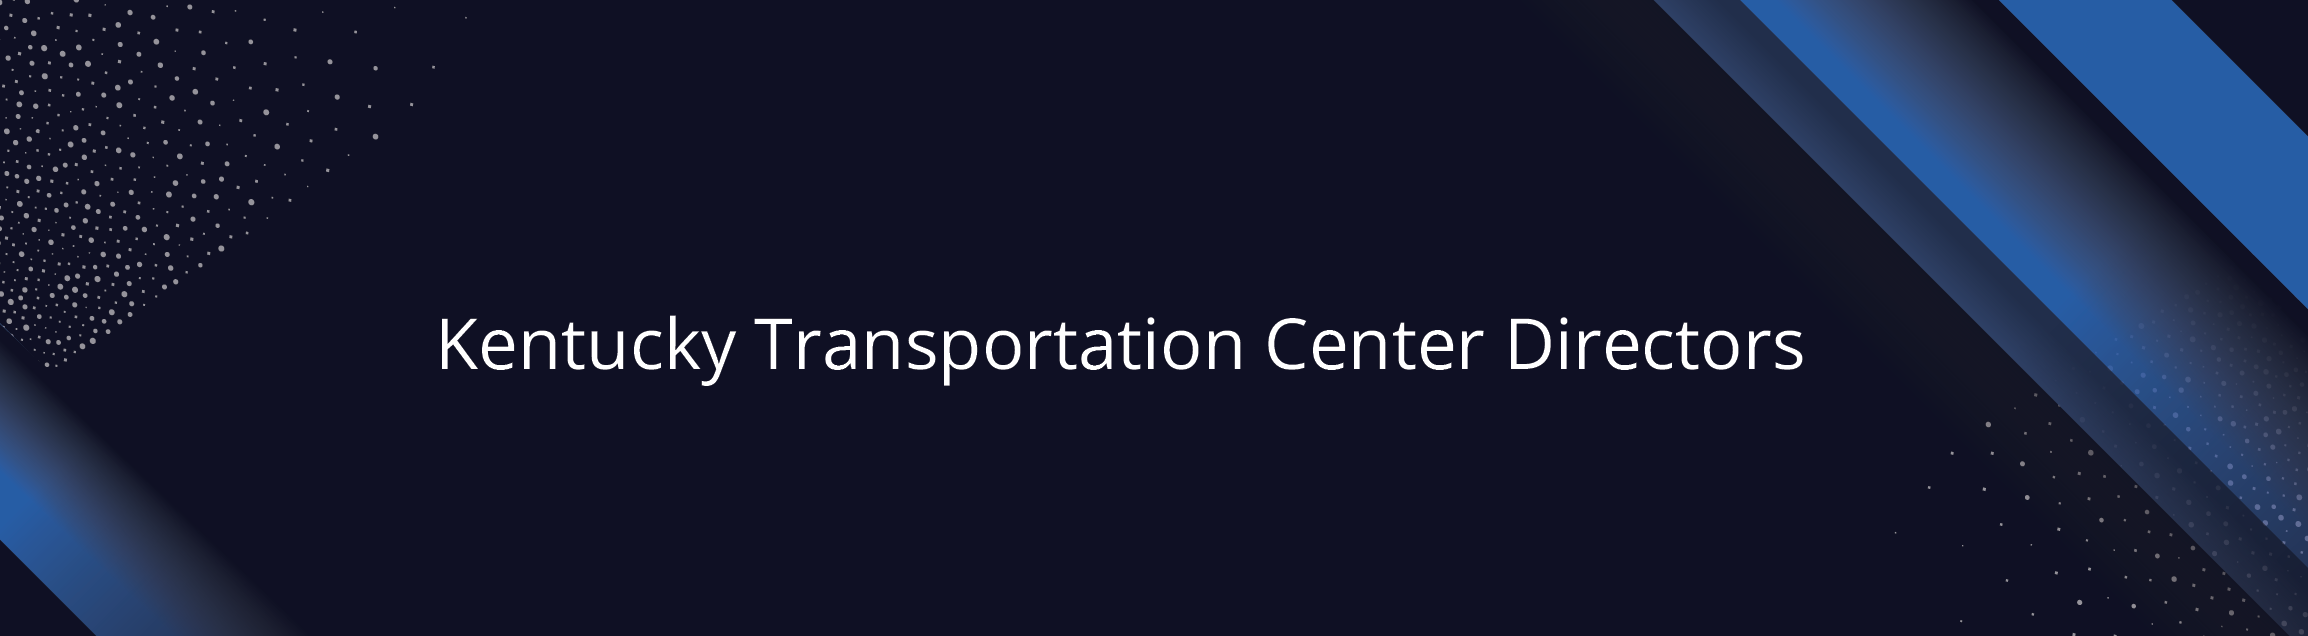 Kentucky Transportation Center Directors